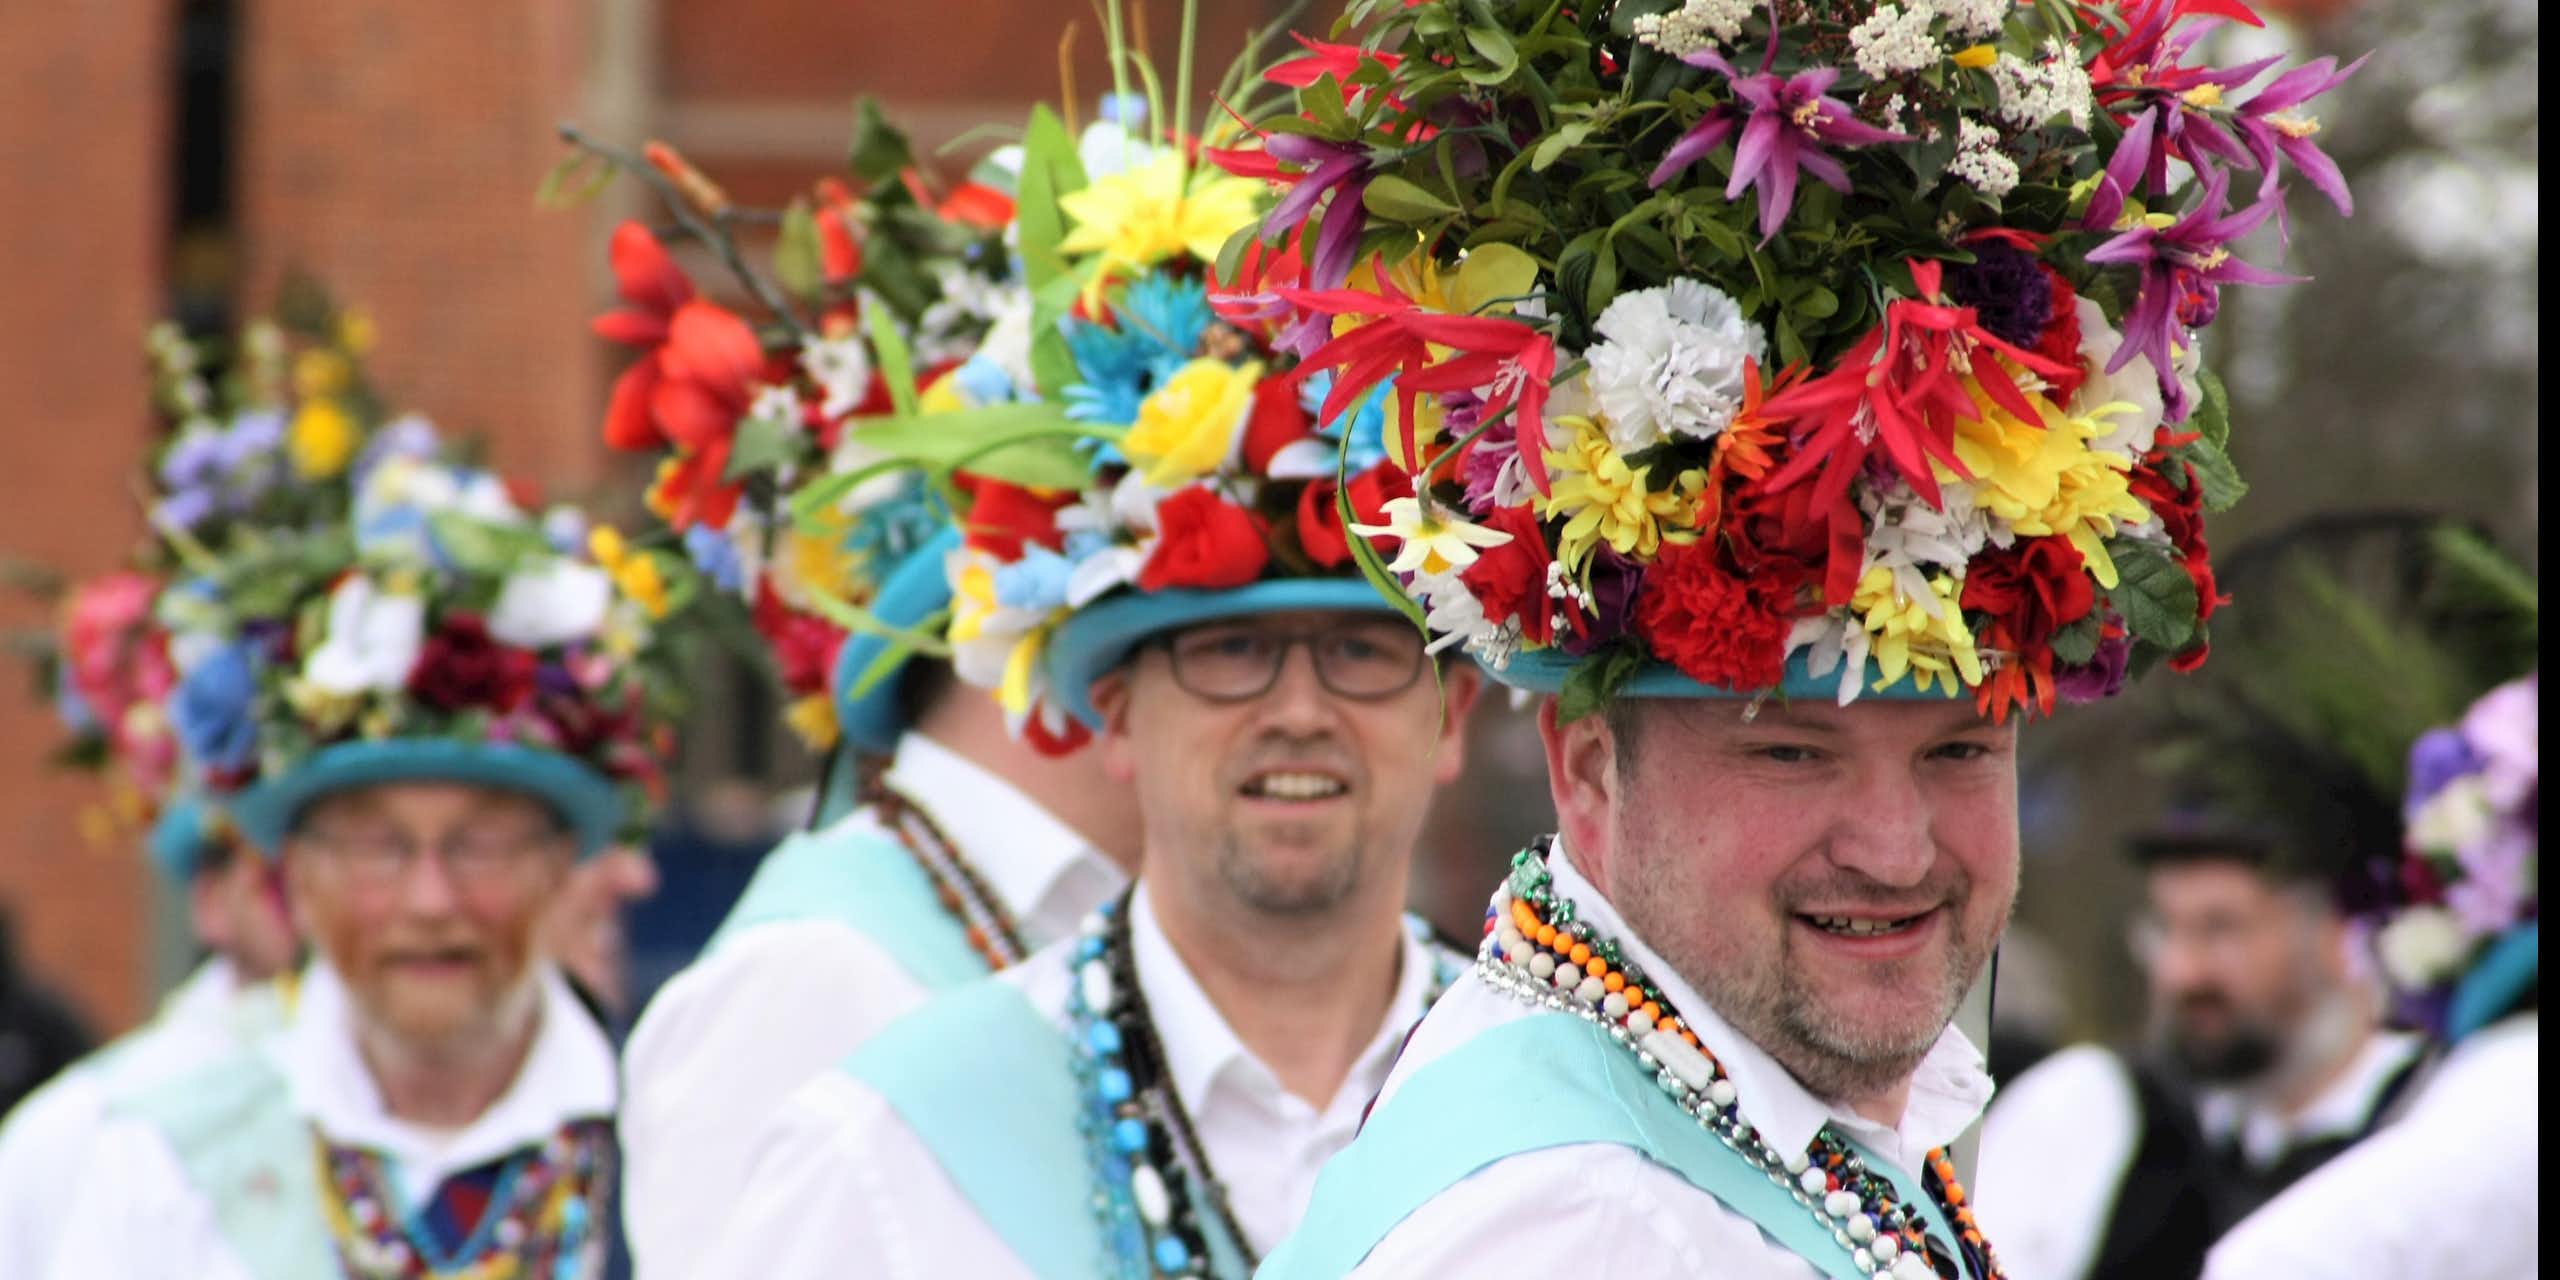 Morris dancers wearing floral hats